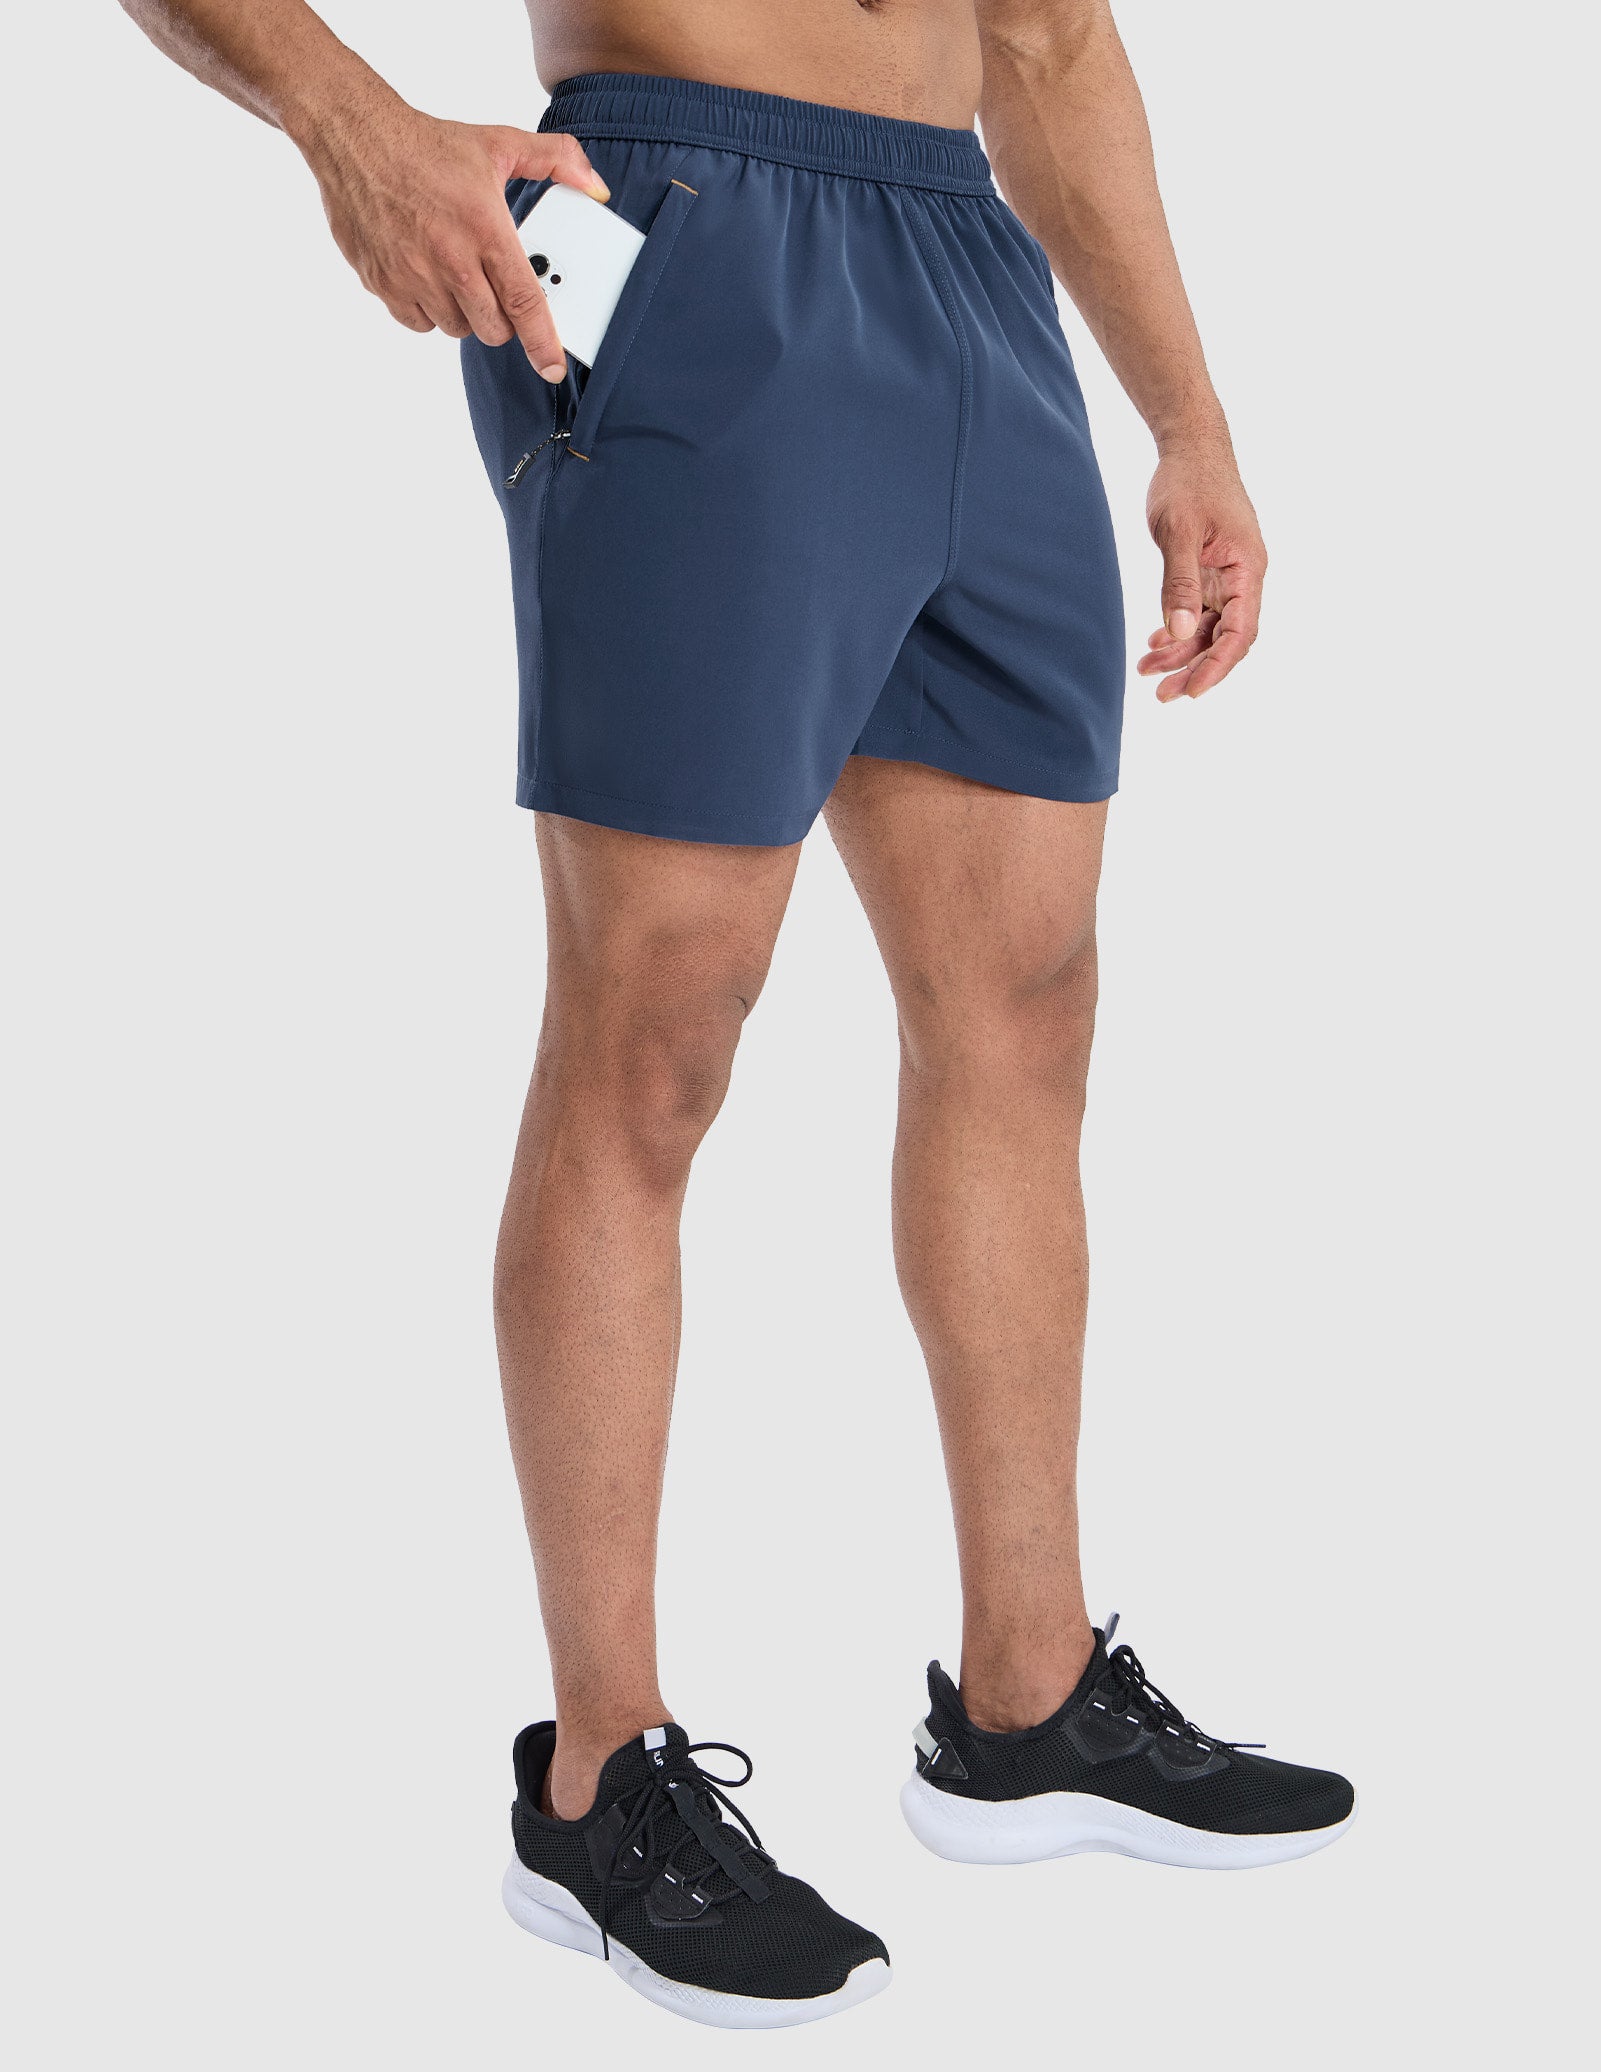 Men's 5-Inch Running Shorts with Zipper Pockets